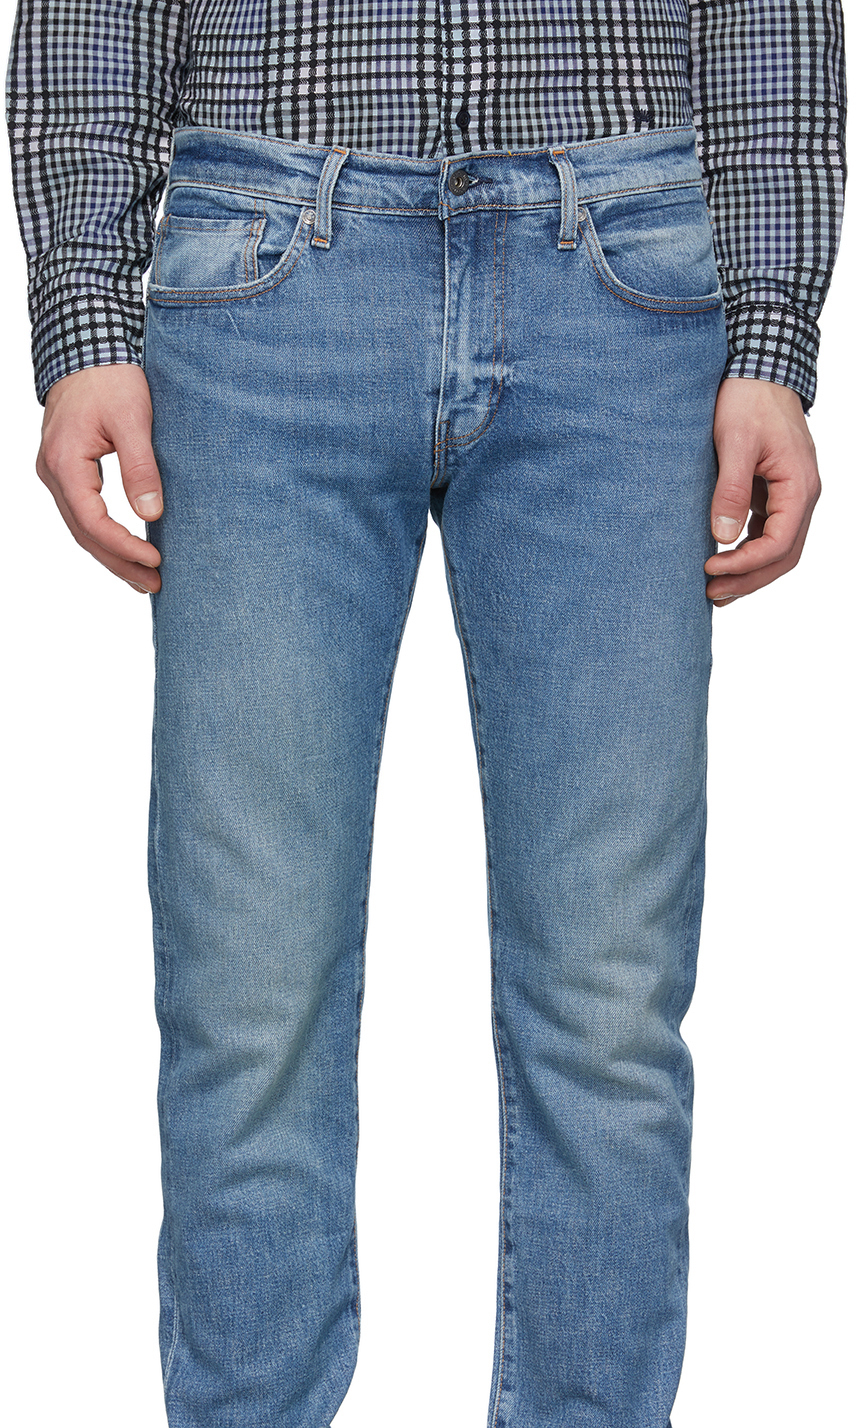 levis selvedge jeans